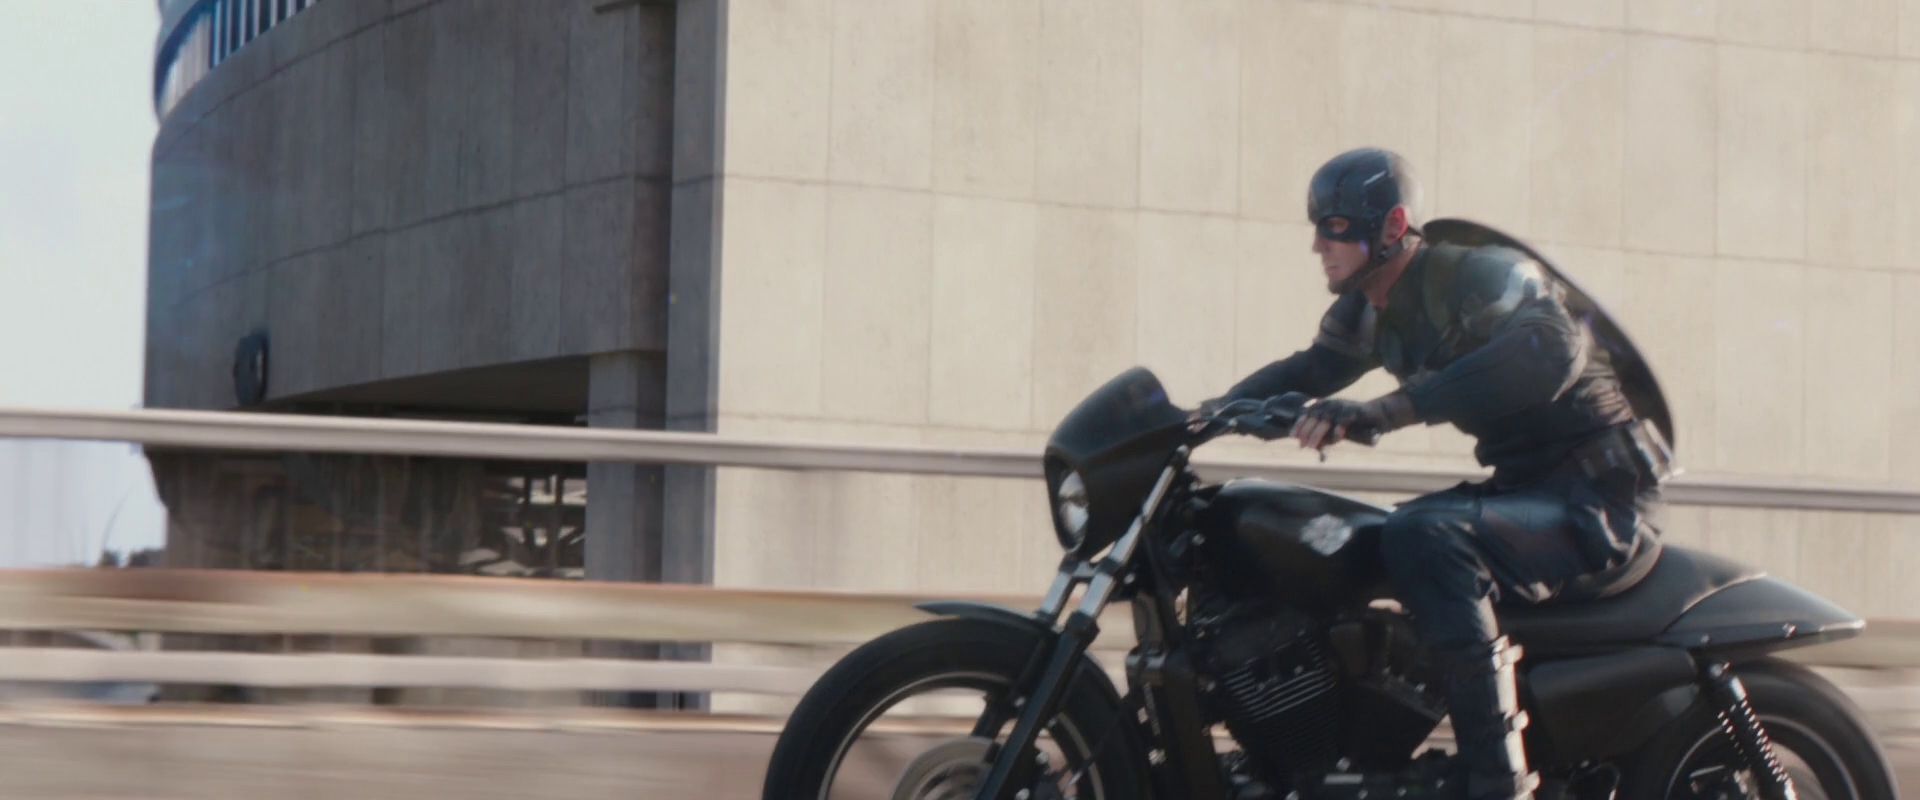 2014 Harley-Davidson Street 750 in Captain America: The Winter Soldier movie